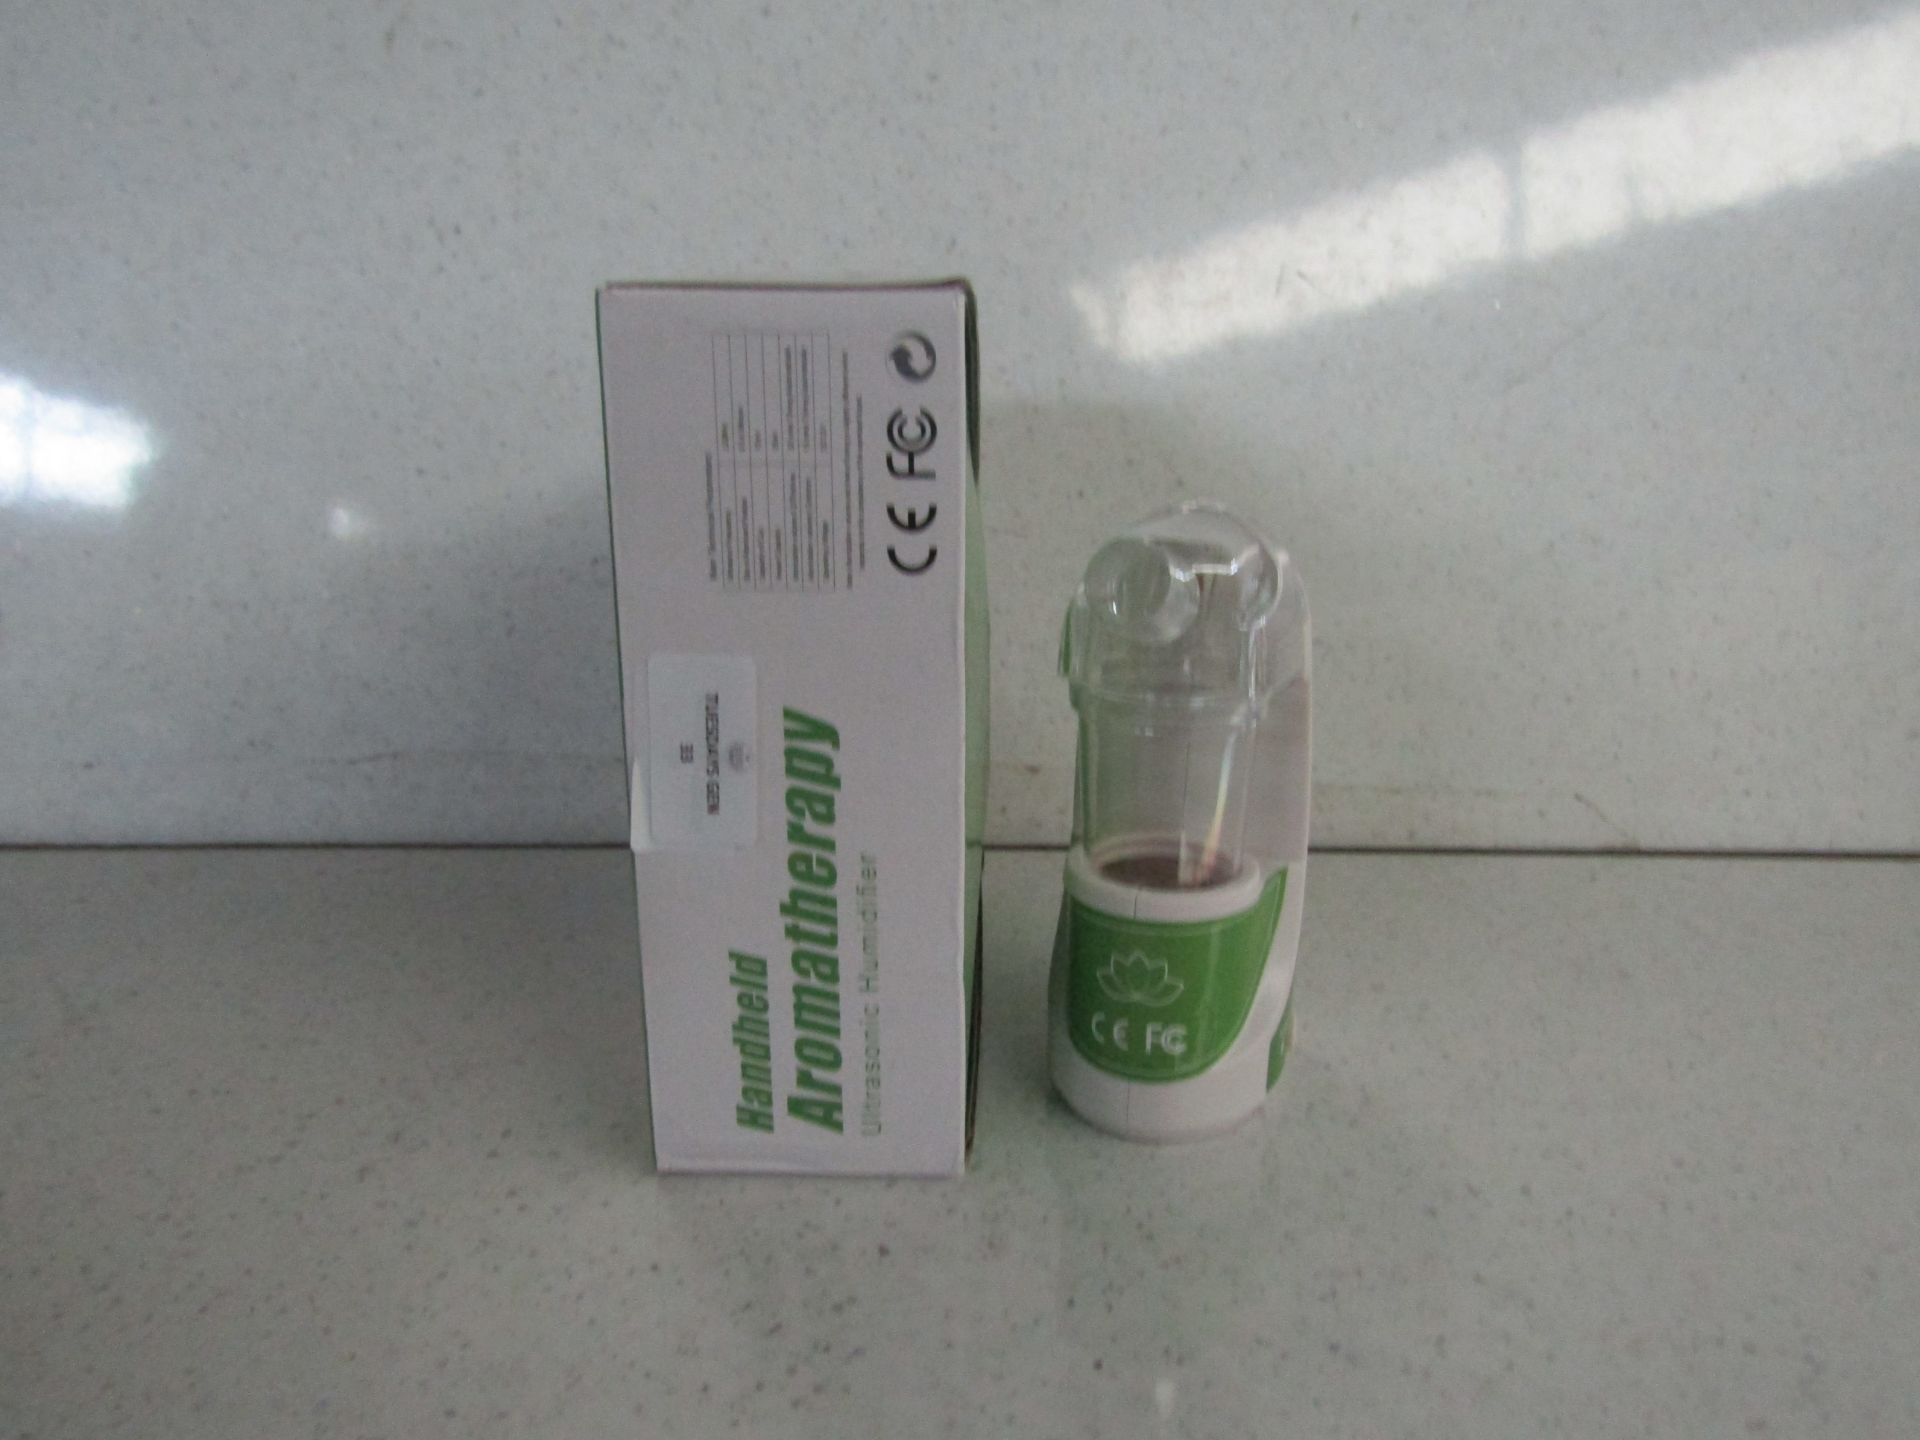 Handheld Aromatherapy Ultrasonic Dehumidifier - Unchecked & Boxed. - Image 4 of 6